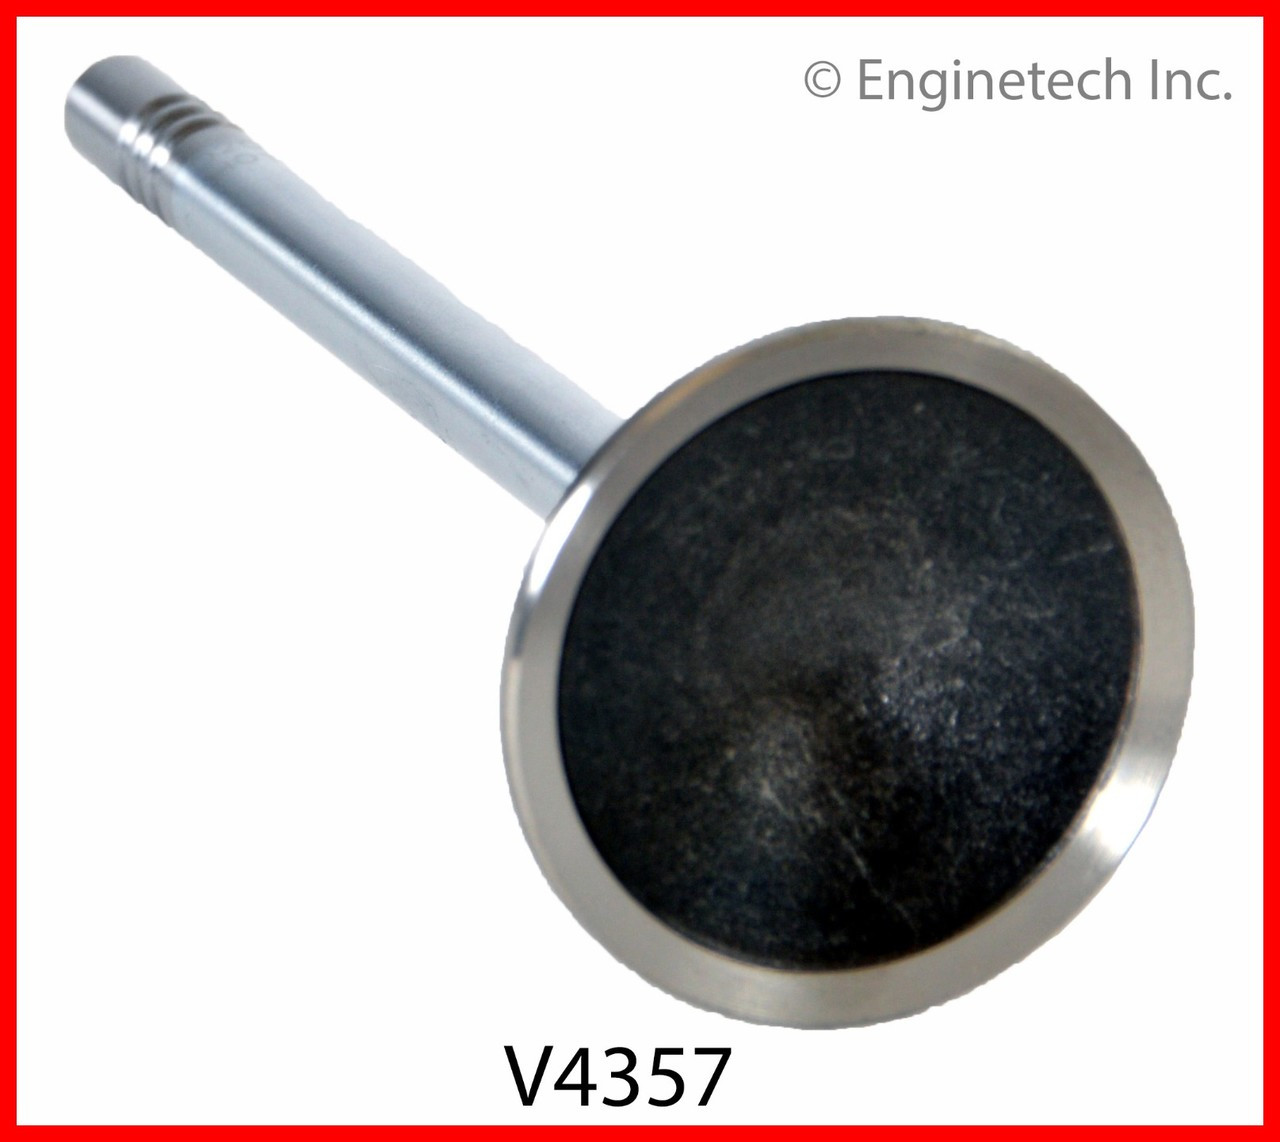 Exhaust Valve - 2012 Ram 1500 3.7L (V4357.H76)